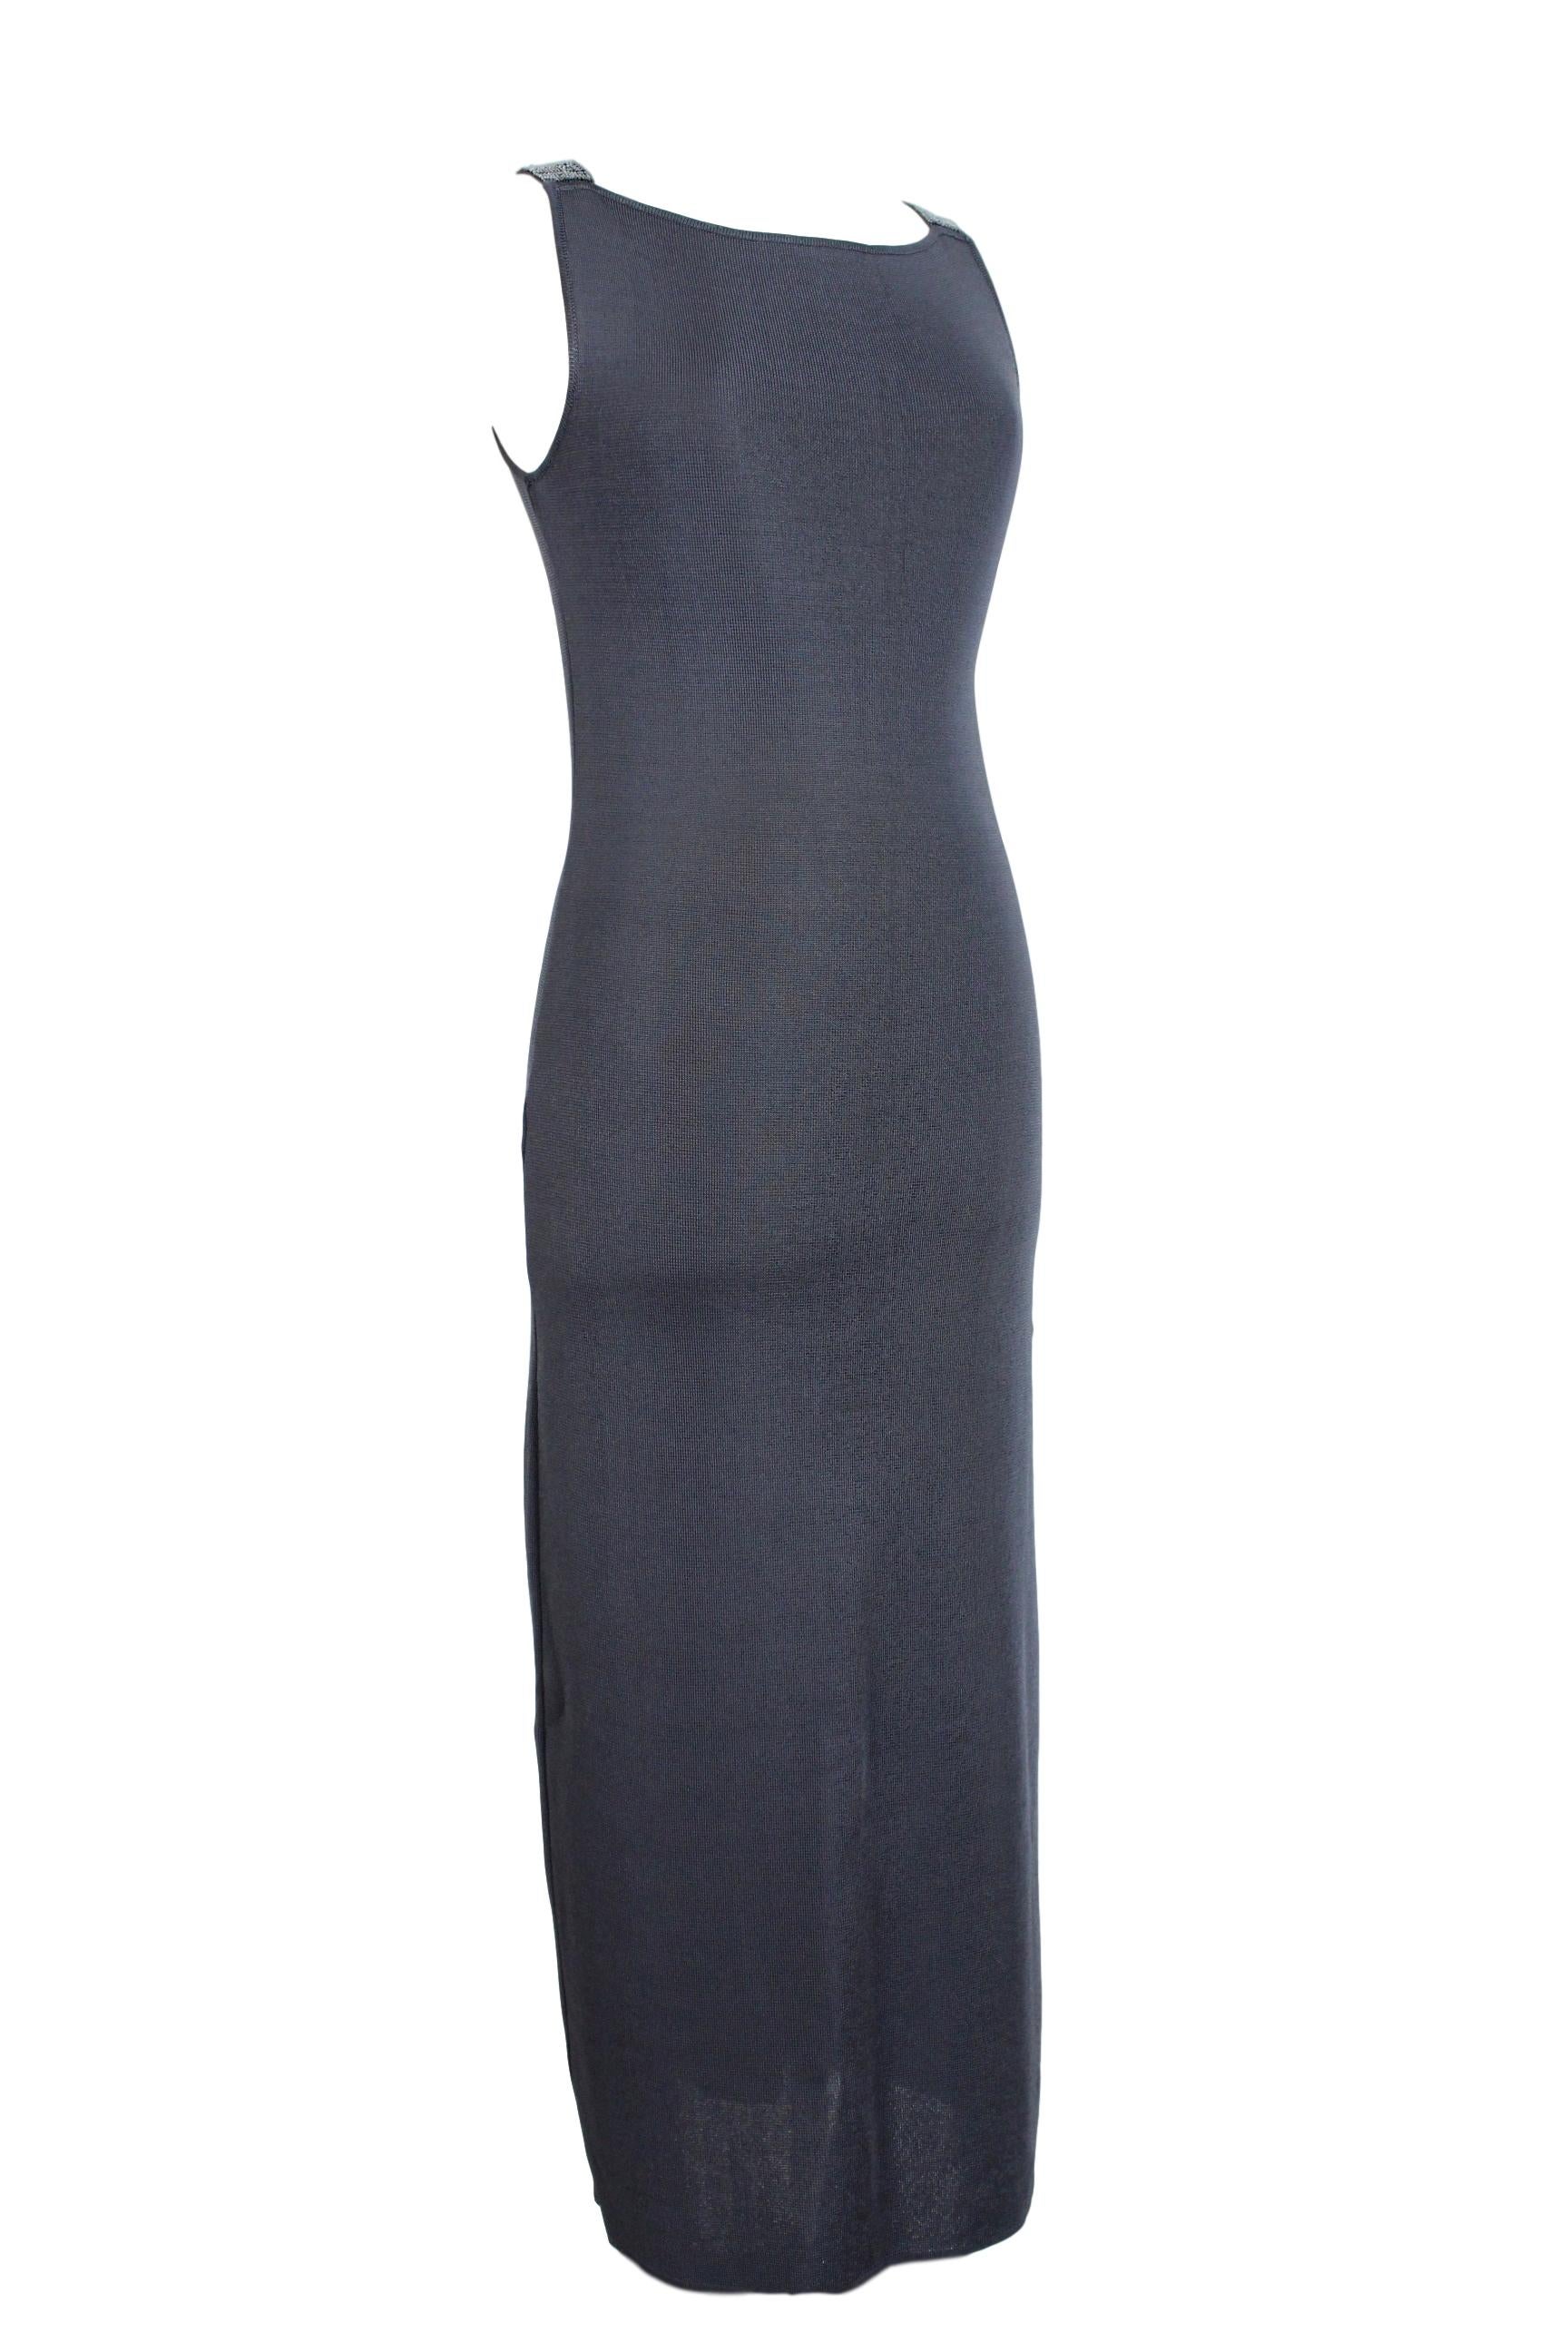 Women's Gianfranco Ferre Viscose Gray Evening Sequins Long Sheath Sleeveless Dress